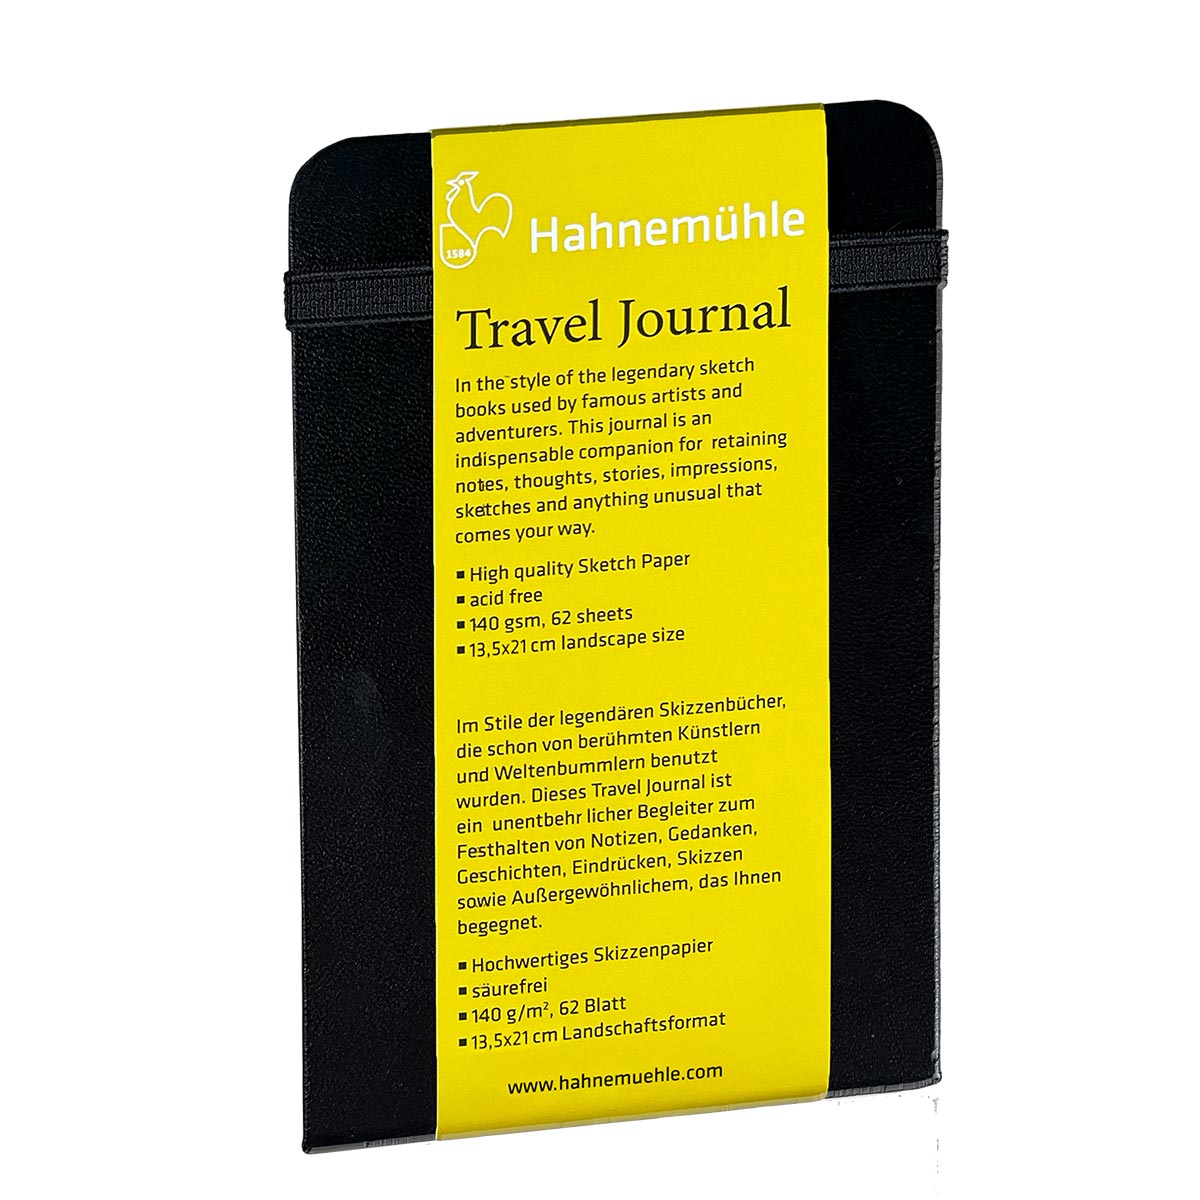 Hahnemuhle - Travel Journal 140gsm 62 Sheets 9x14cm - Landscape